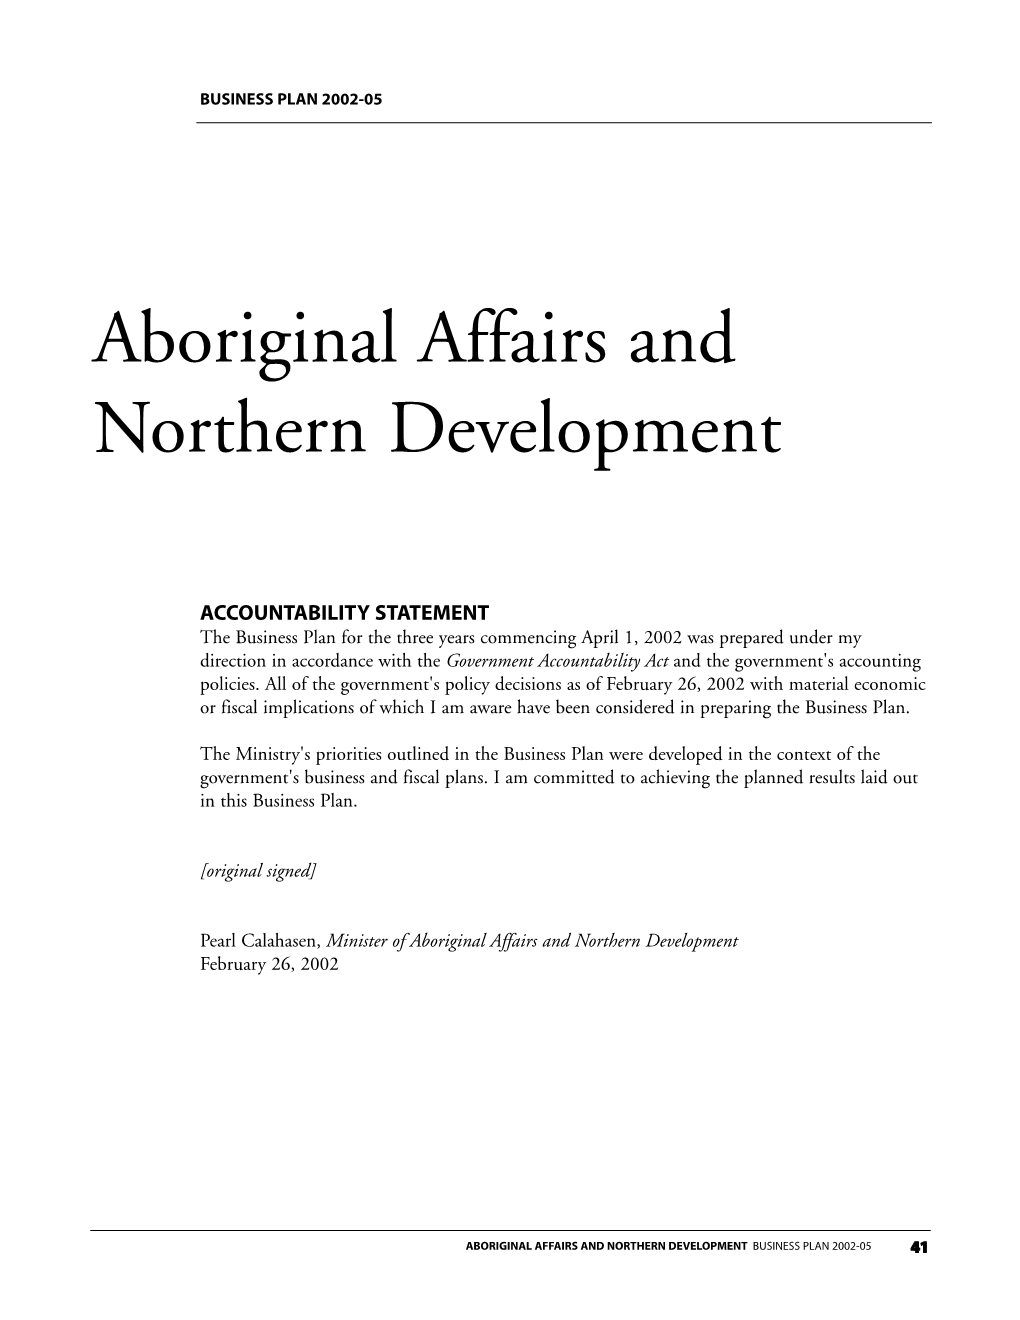 Aboriginal Affairs and Northern Development